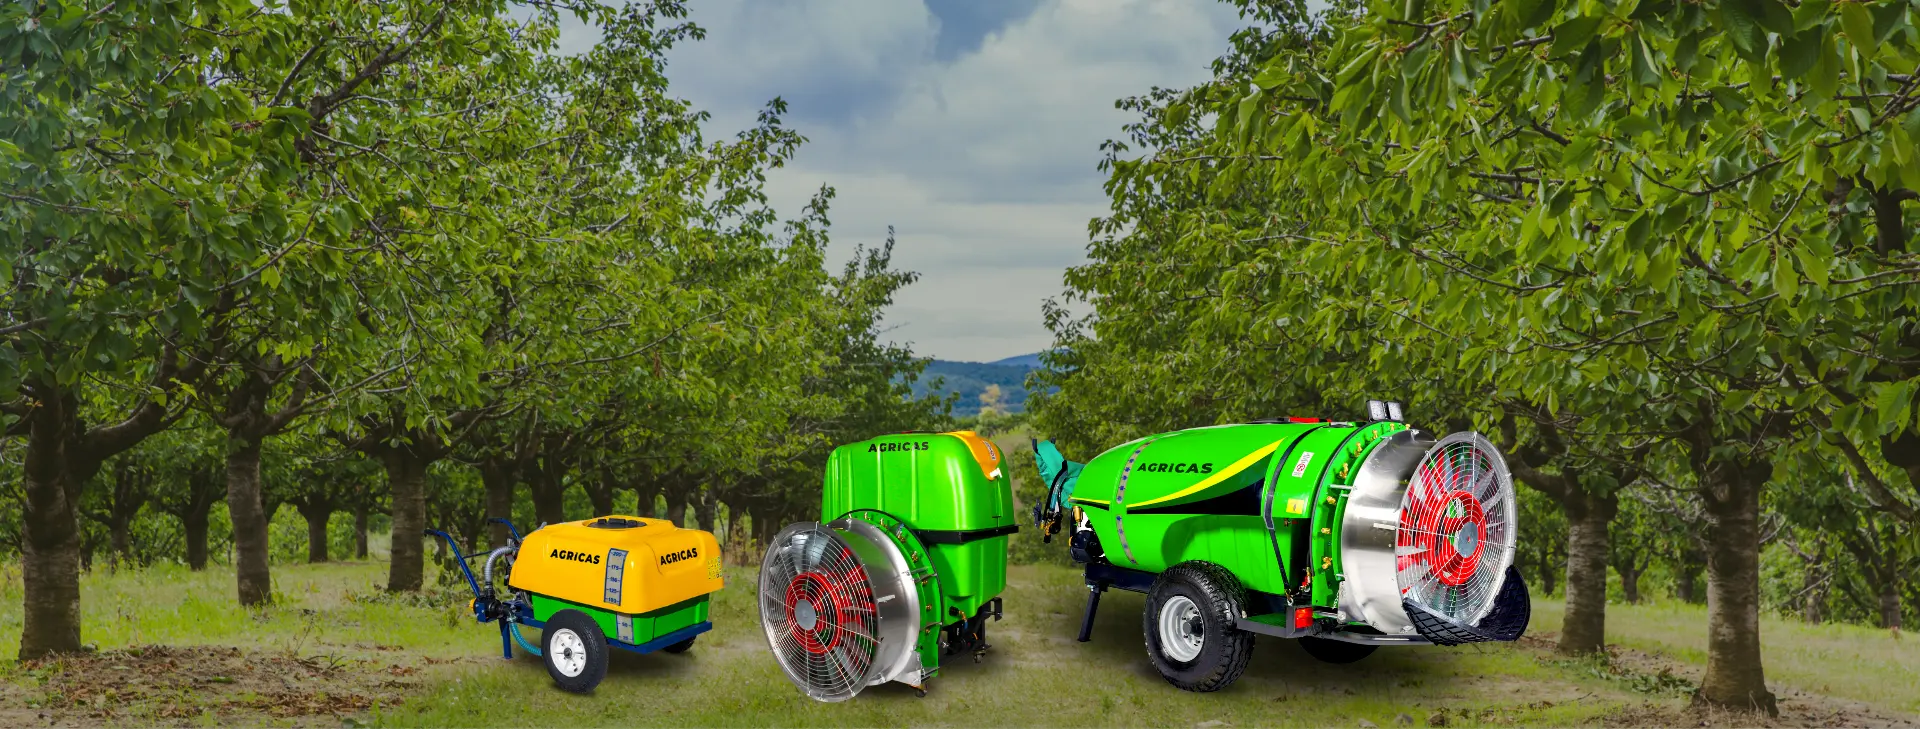 Field, Orchard, Vineyard and Wheelbarrow Sprayers